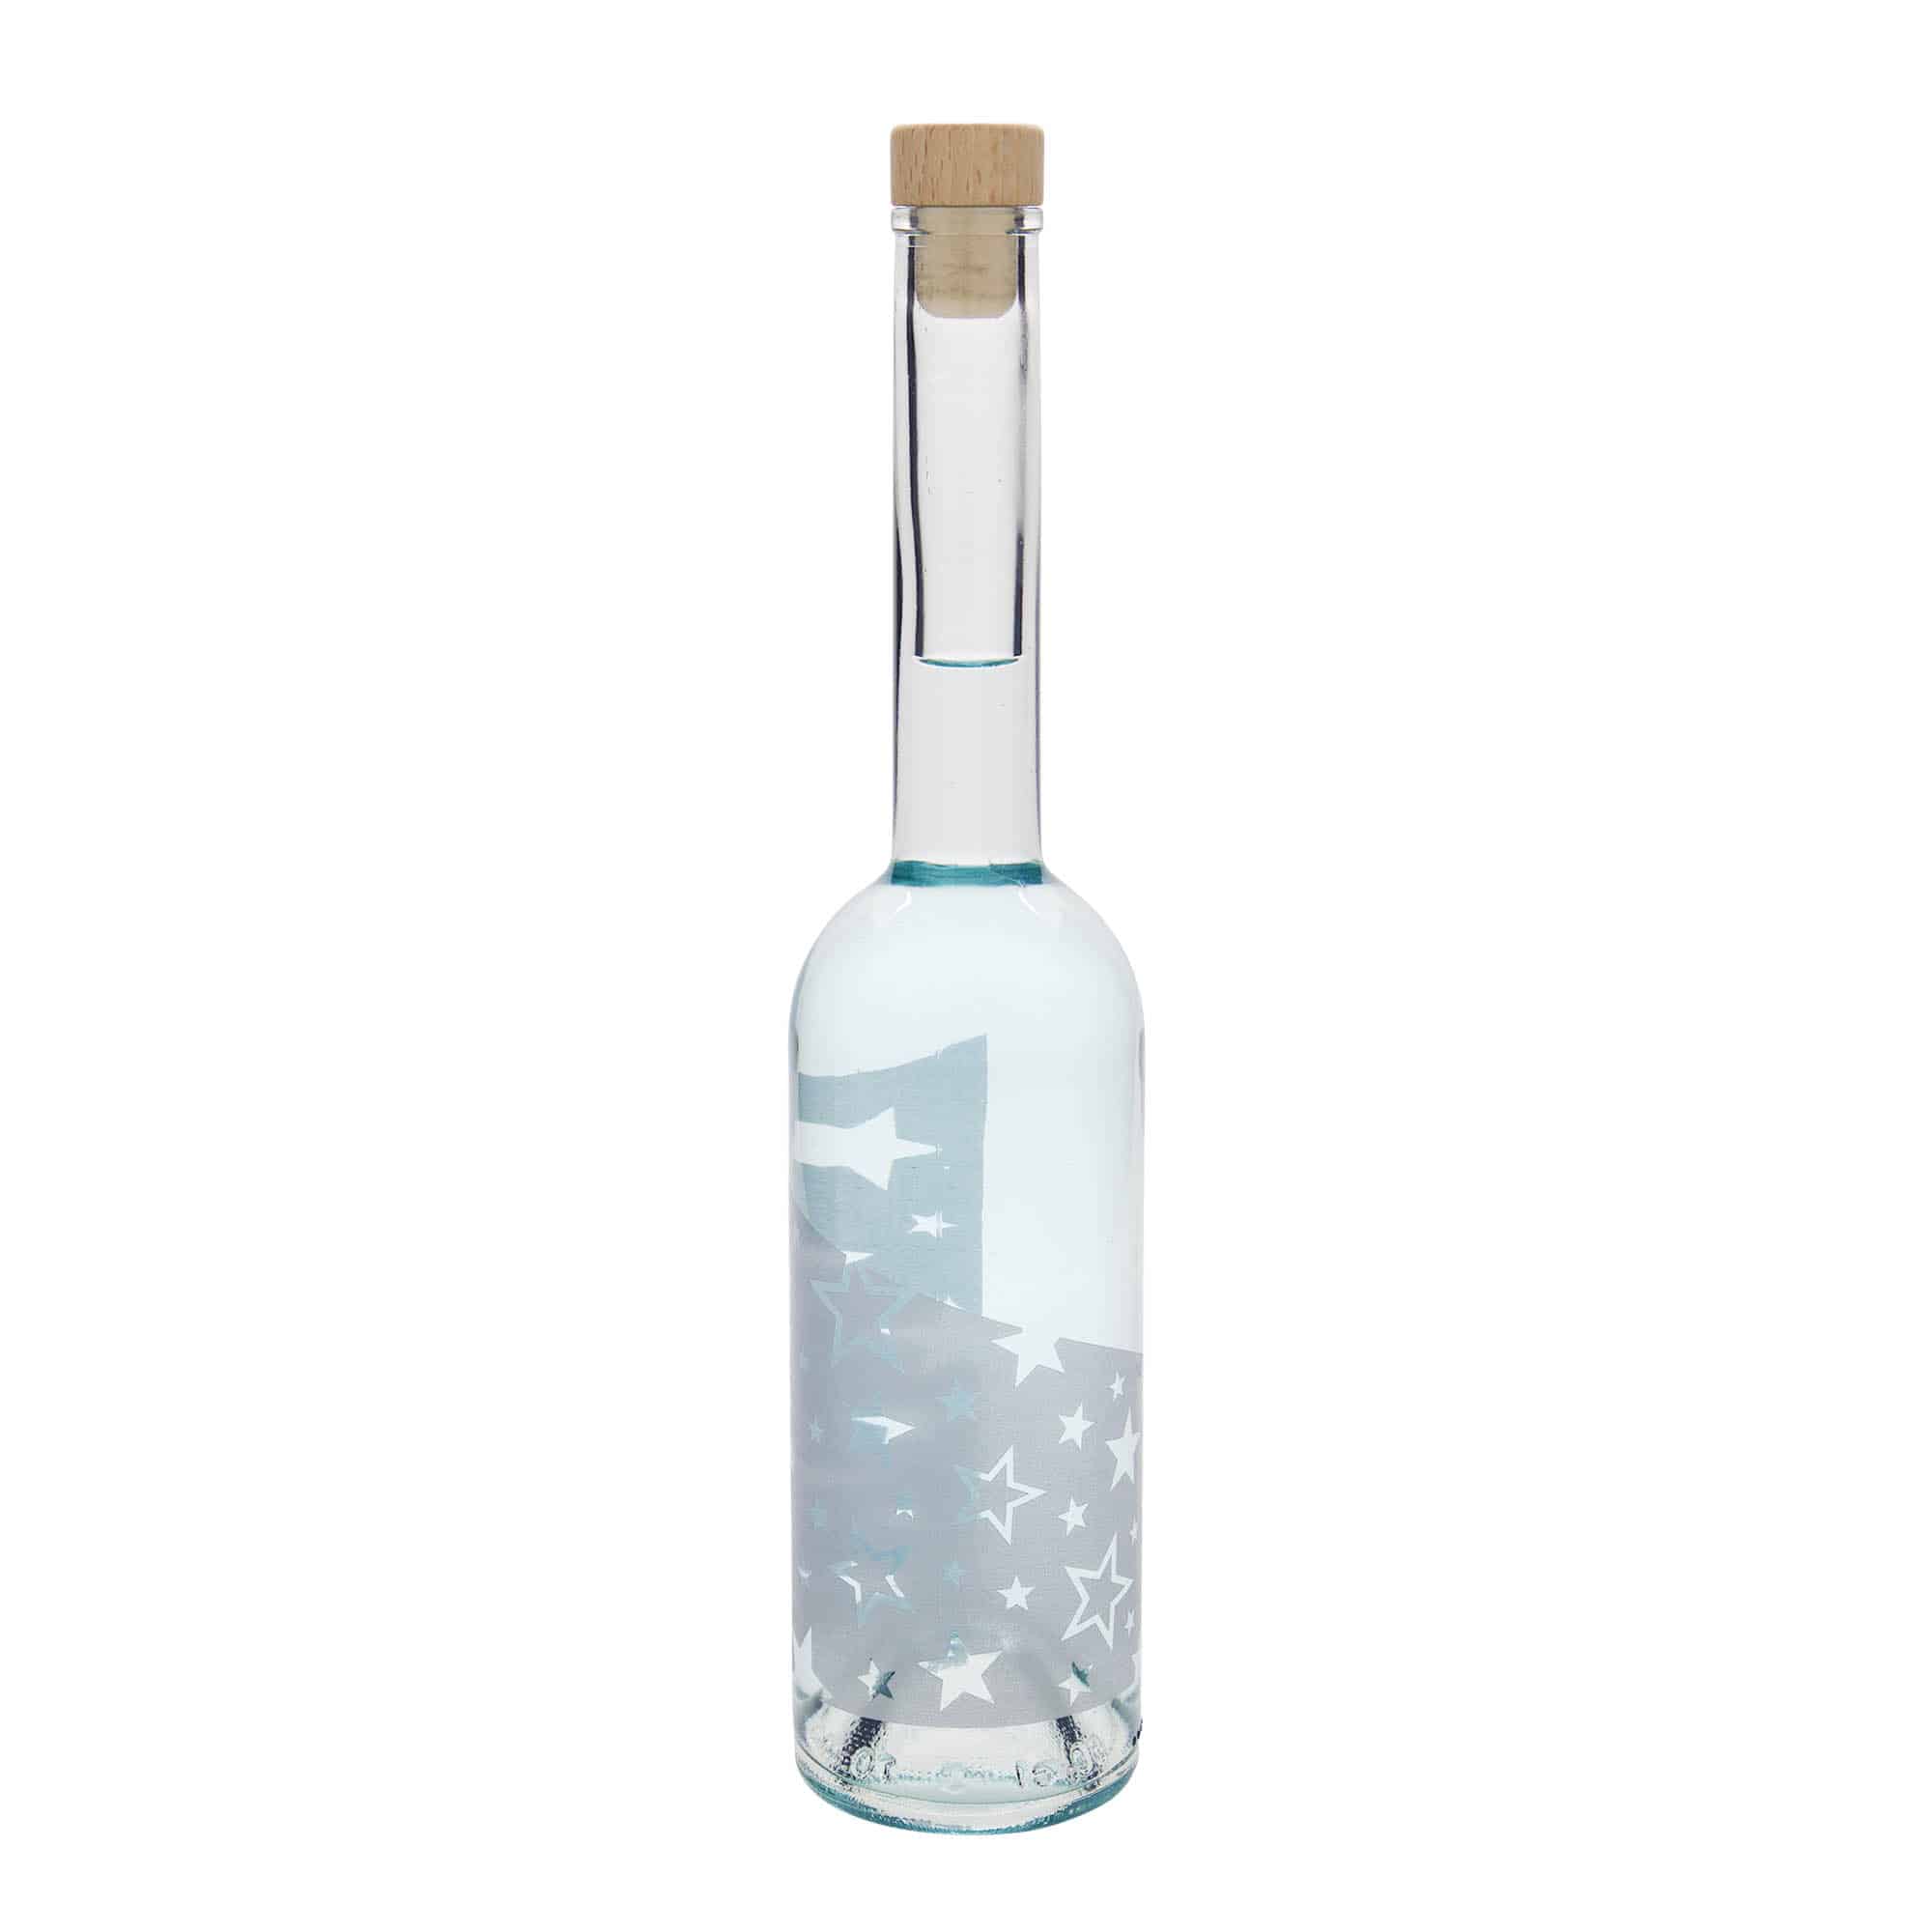 500 ml glass bottle 'Opera', print: silver stars, closure: cork